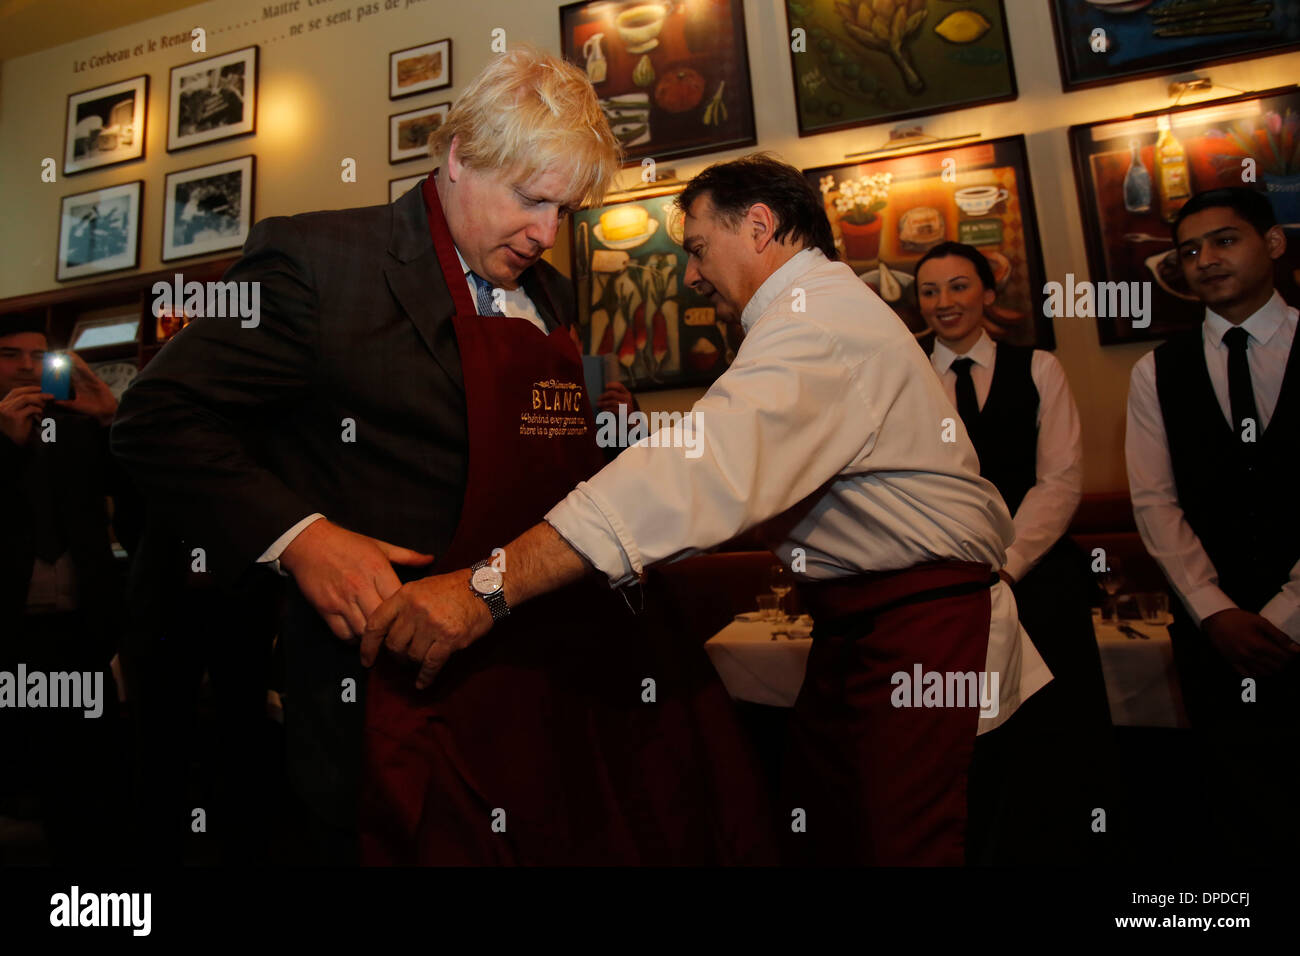 Photo call for Mayor of London, Boris Johnson, with Chef Raymond Blanc Stock Photo